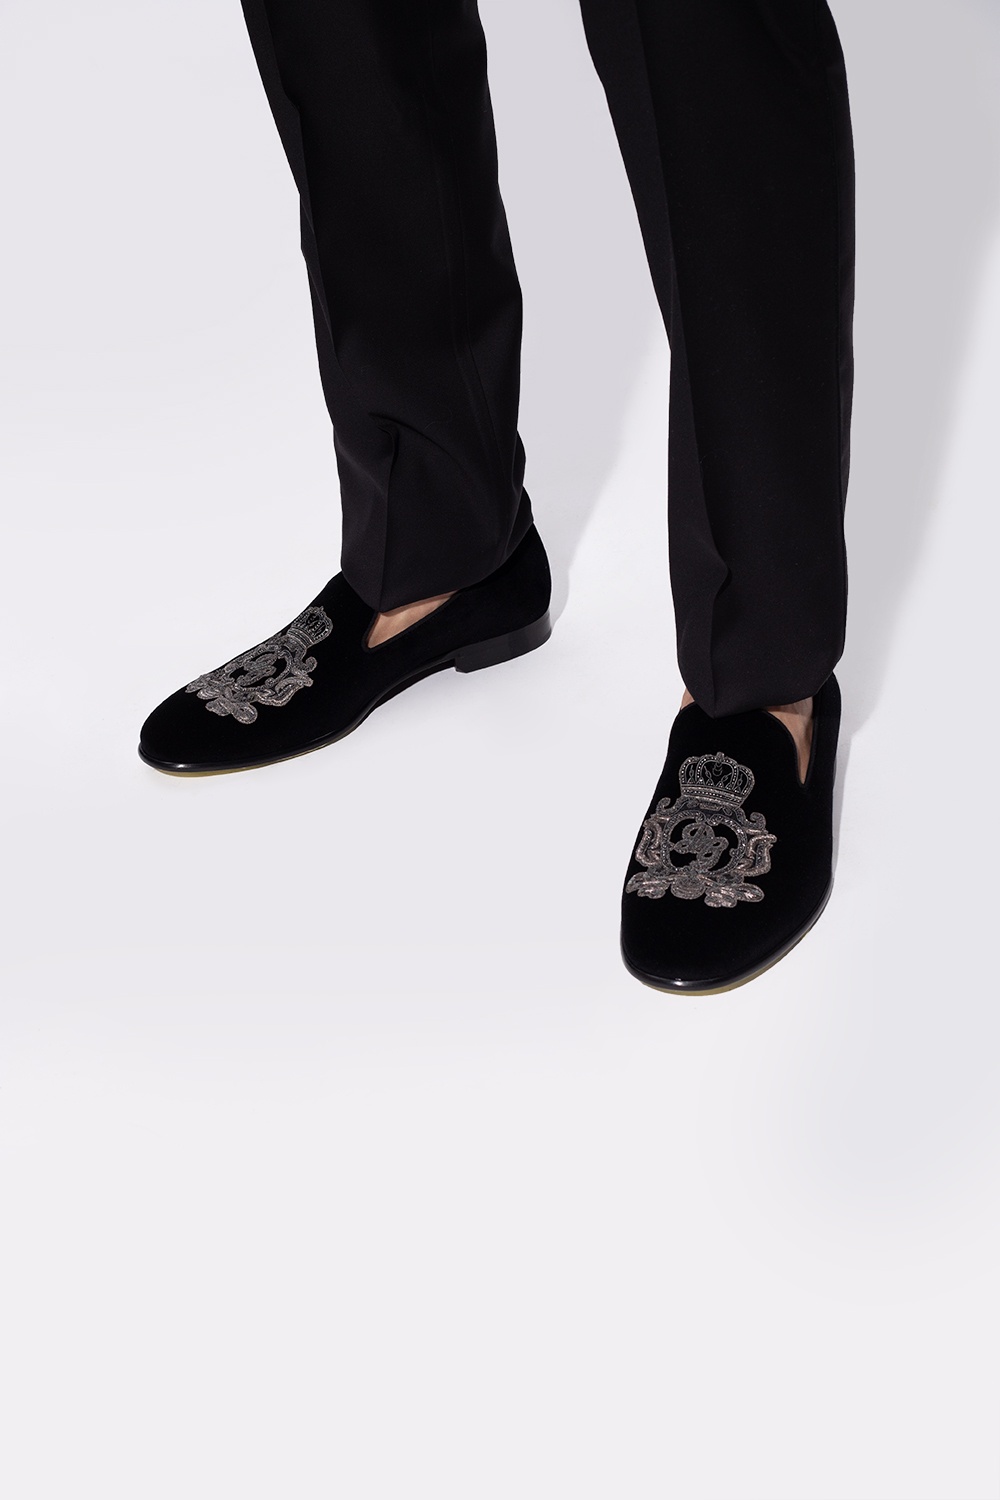 dolce & gabbana black logo jeans ‘Leonardo’ loafers